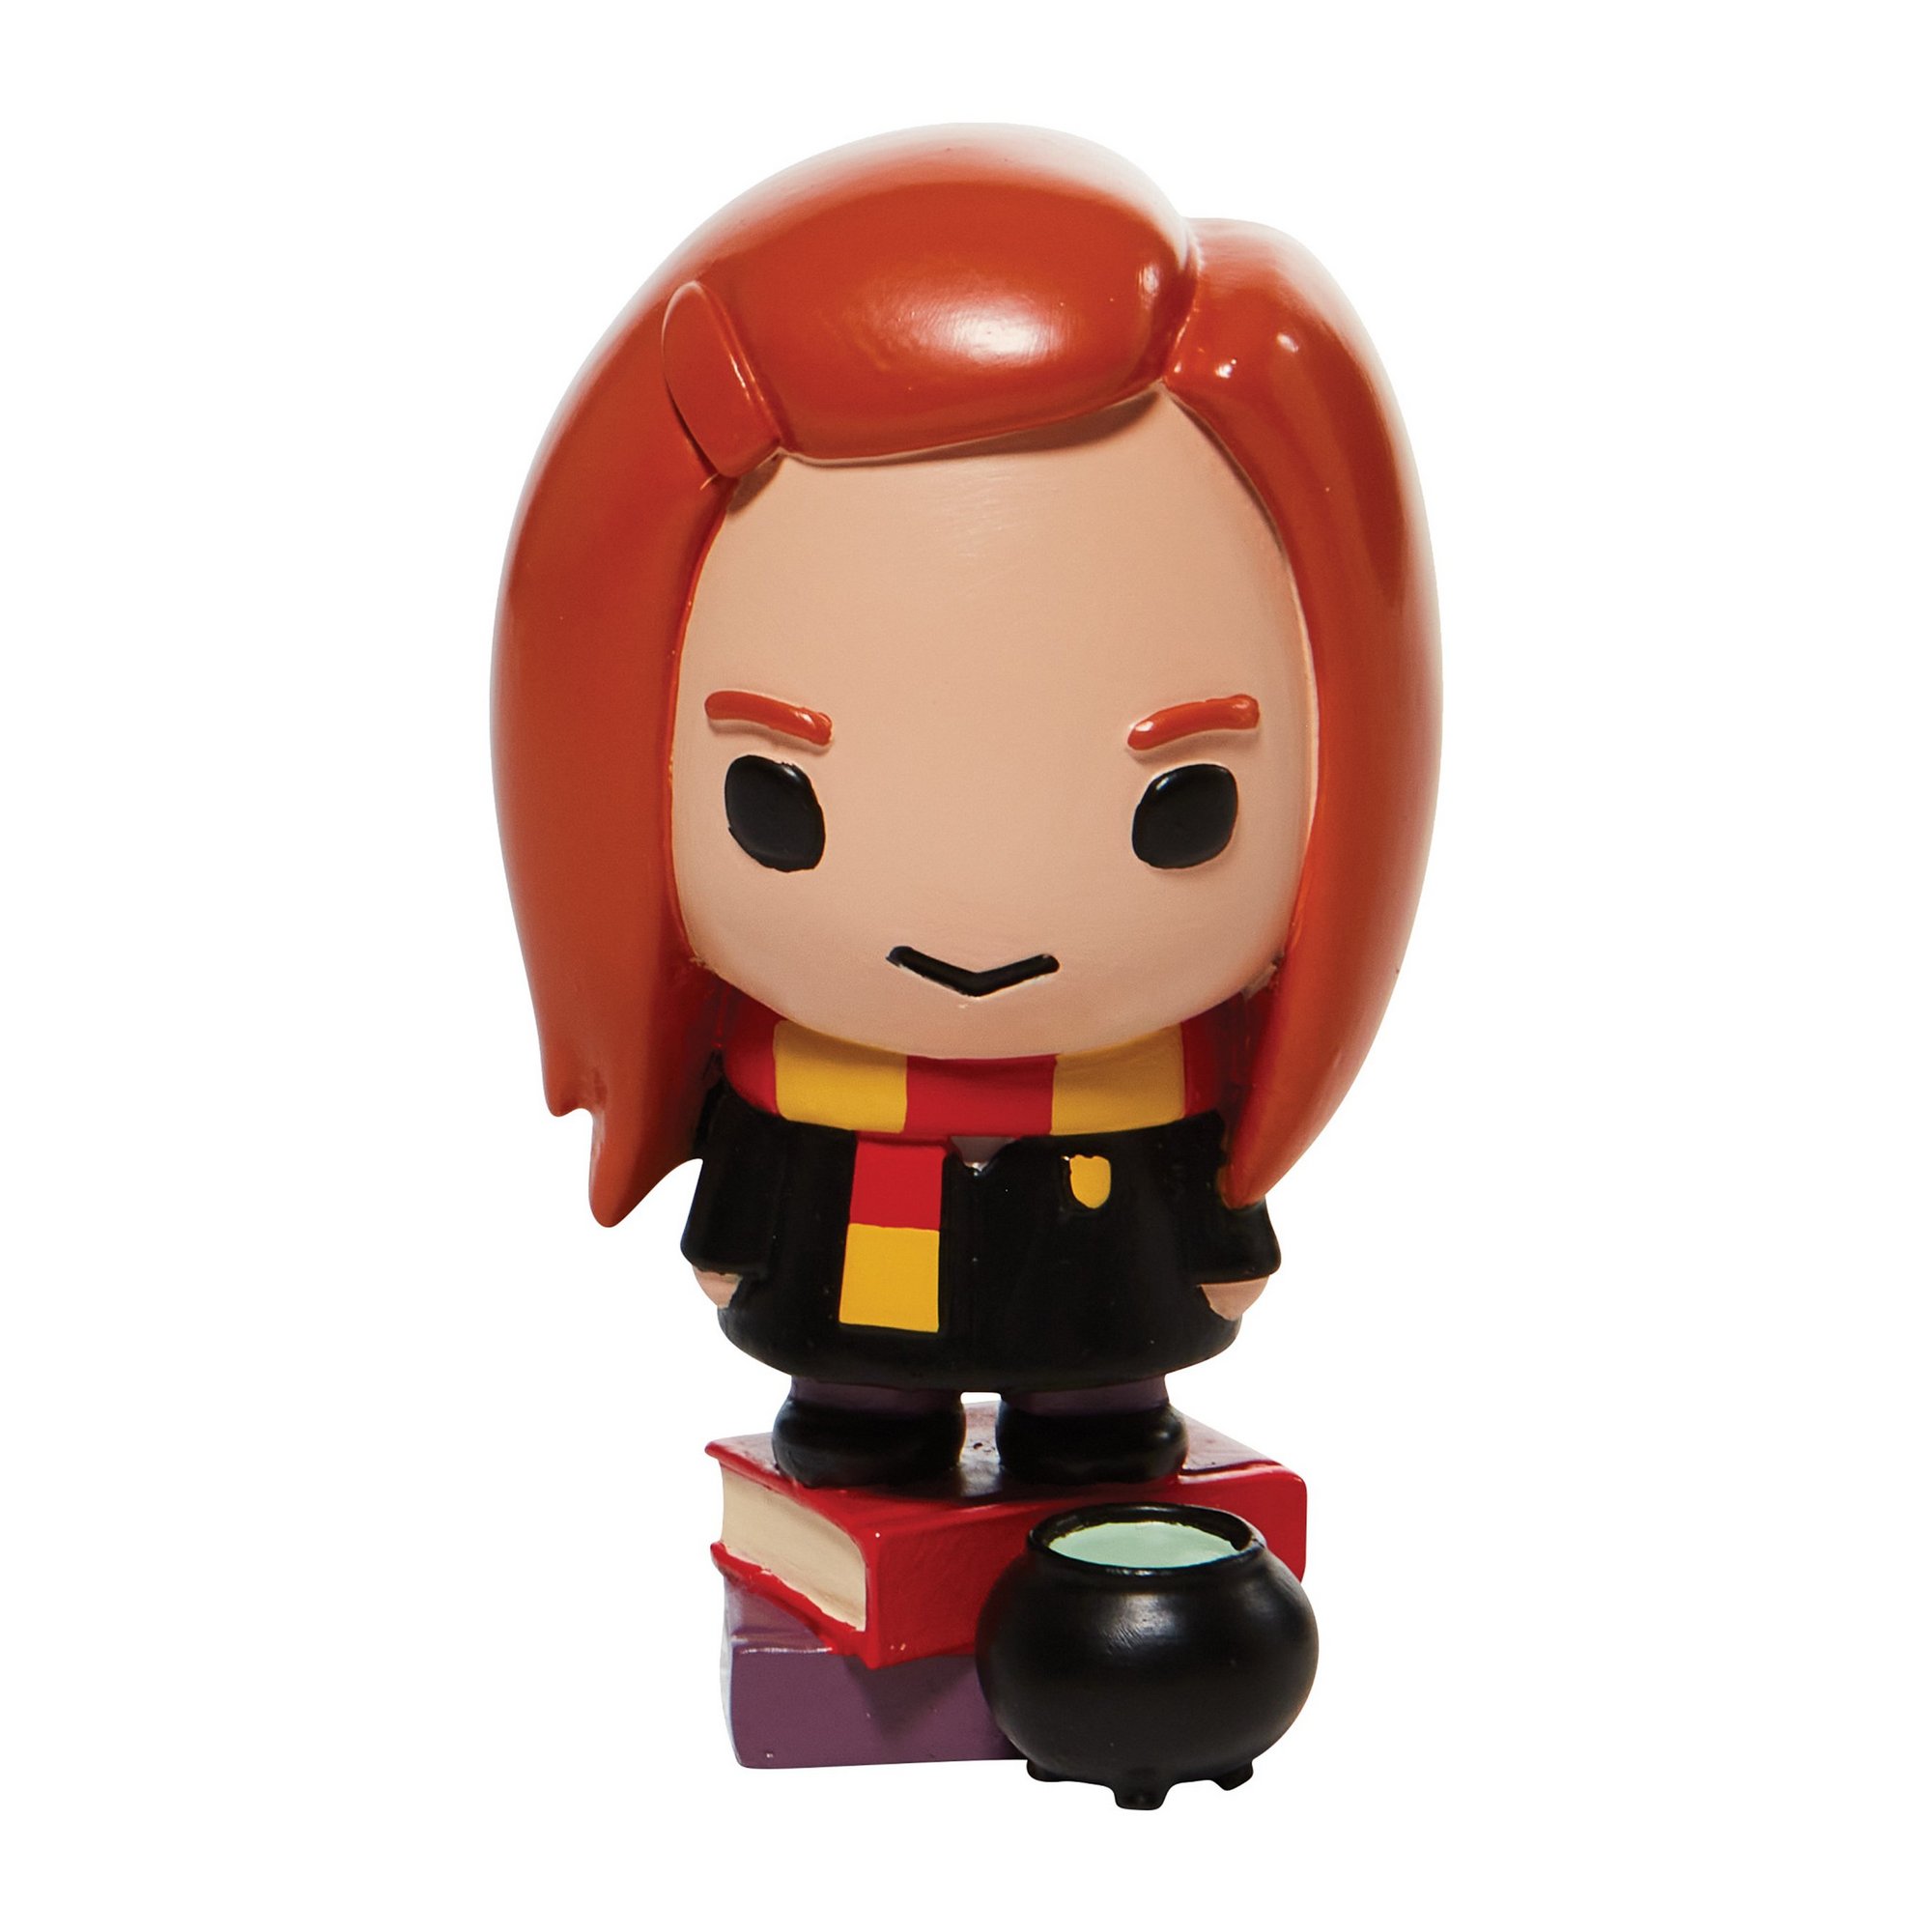 Harry Potter Ginny Weasley Charm Figurine